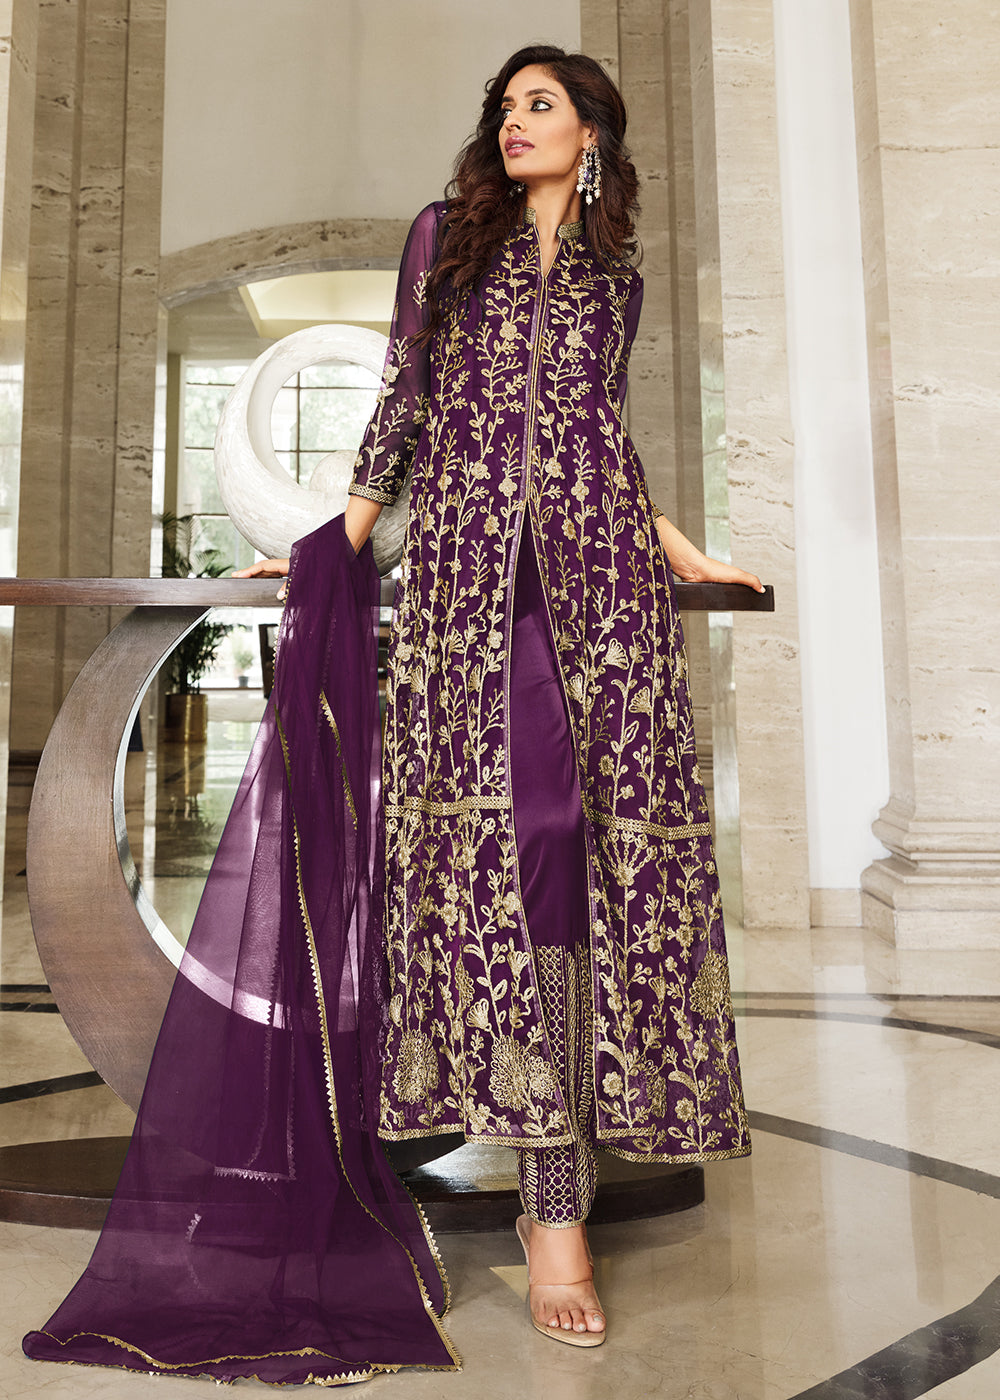 Buy Now Pretty Plum Purple Designer Front Slit Anarkali Dress Online in USA, UK, Australia, New Zealand, Canada & Worldwide at Empress Clothing.